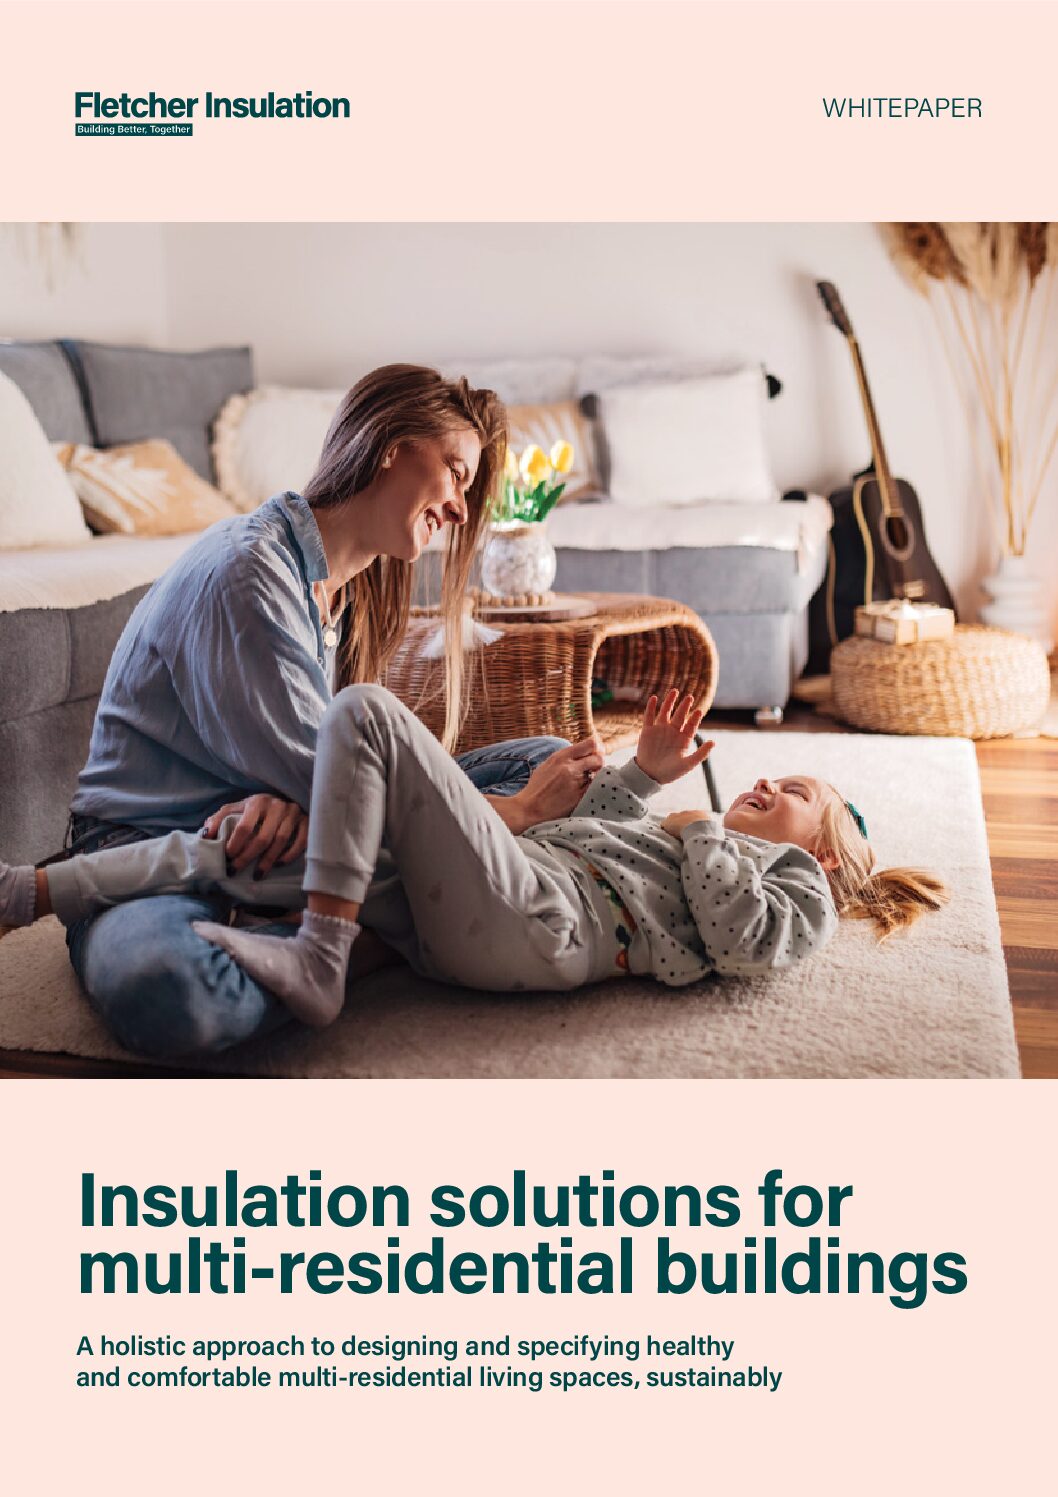 https://insulation.com.au/wp-content/uploads/2024/Whitepaper-Multi-residential-Fletcher-Insulation-1-pdf.jpg